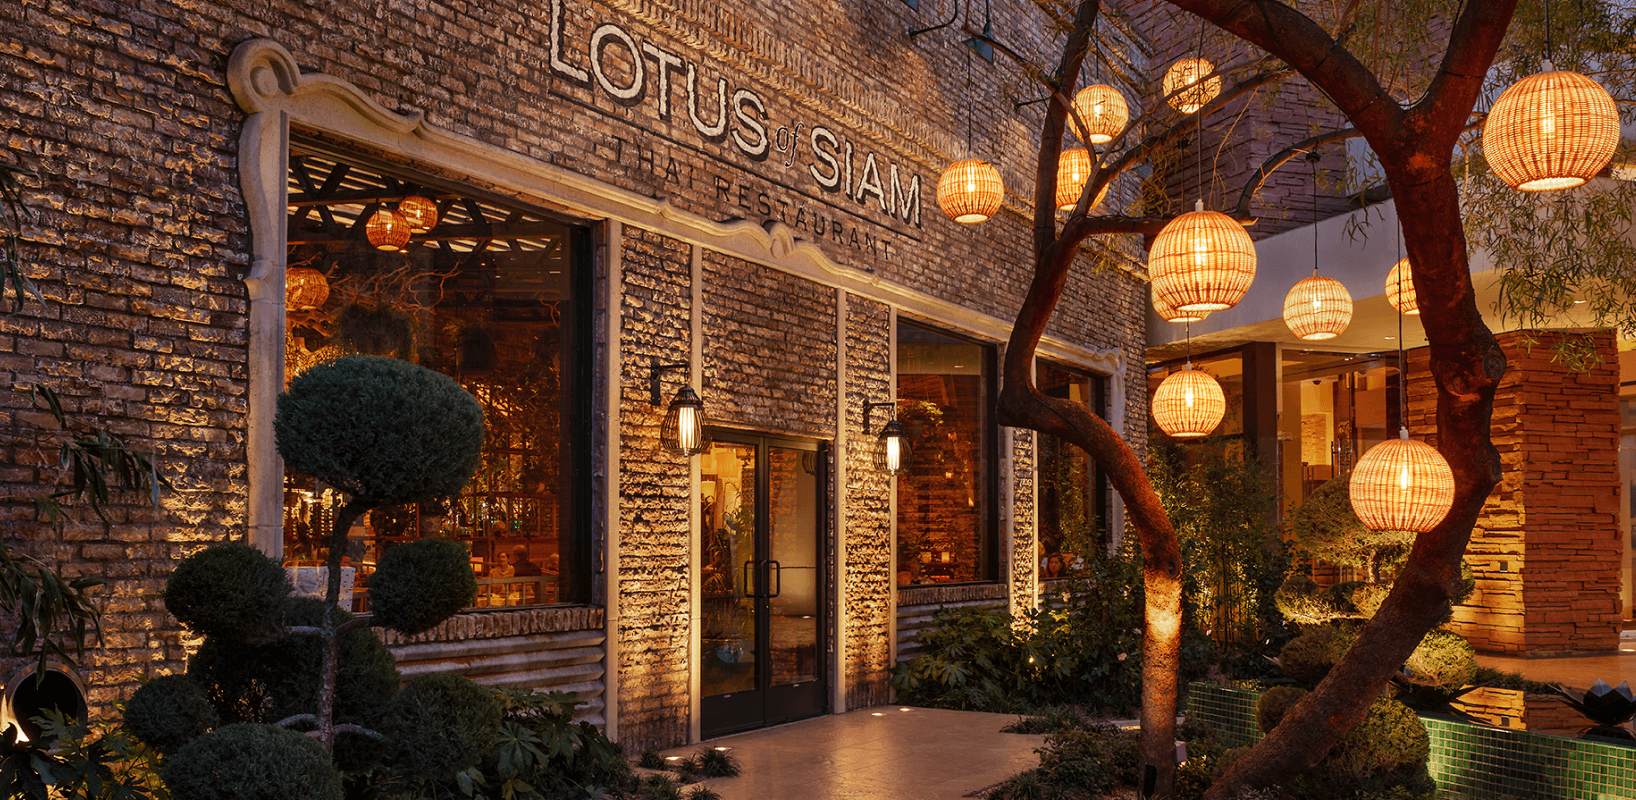 Lotus of Siam storefront